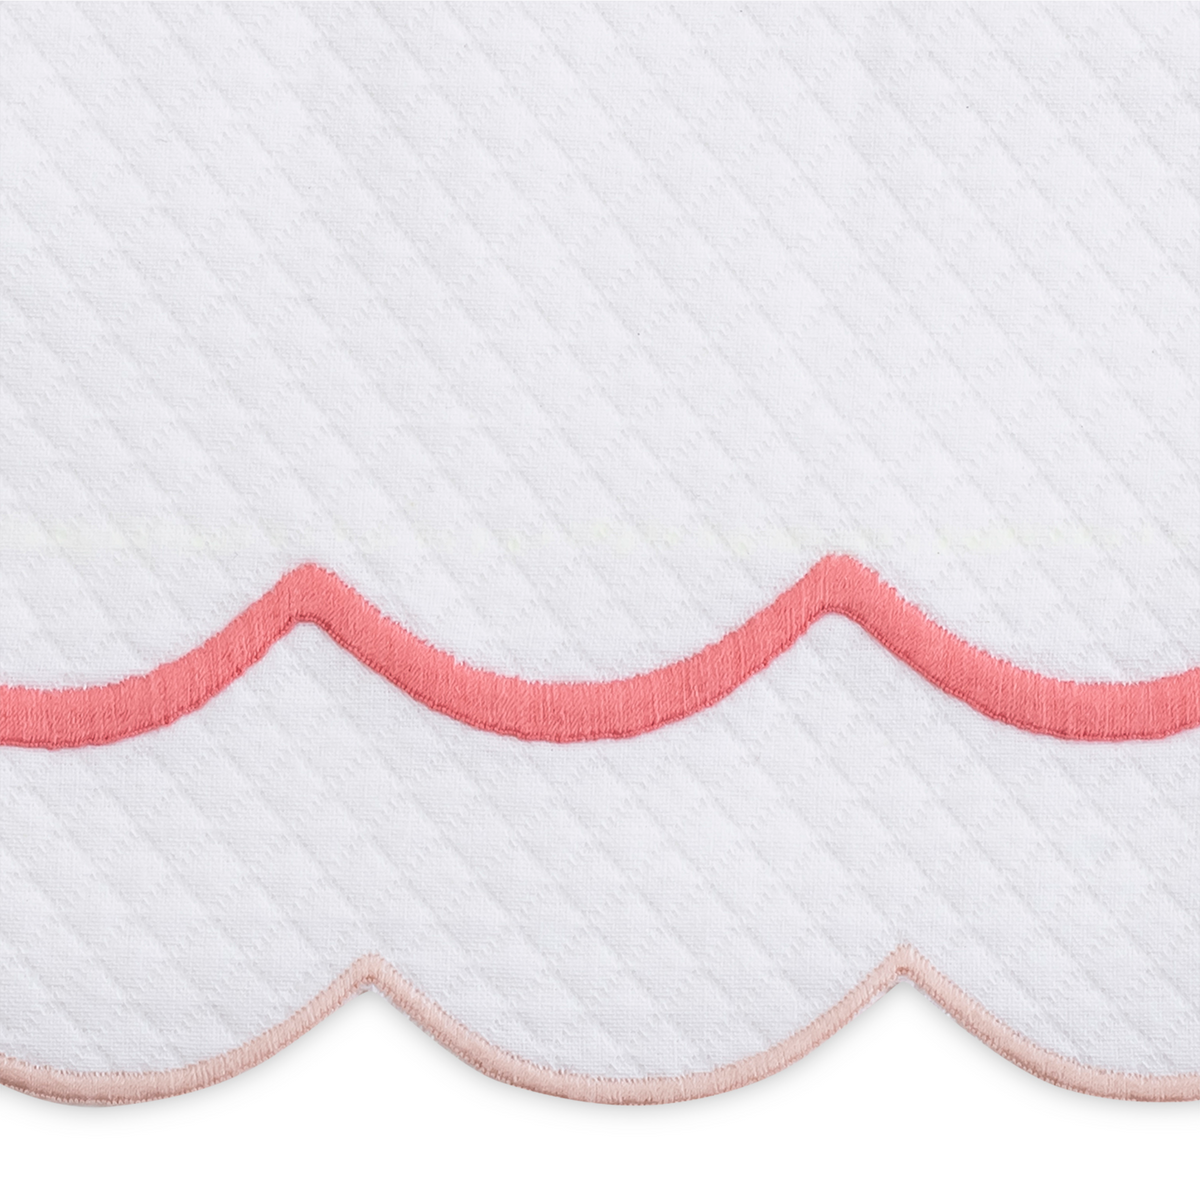 Closeup of Matouk India Pique Bedding Swatch Sample in Blush Color Fine Linen